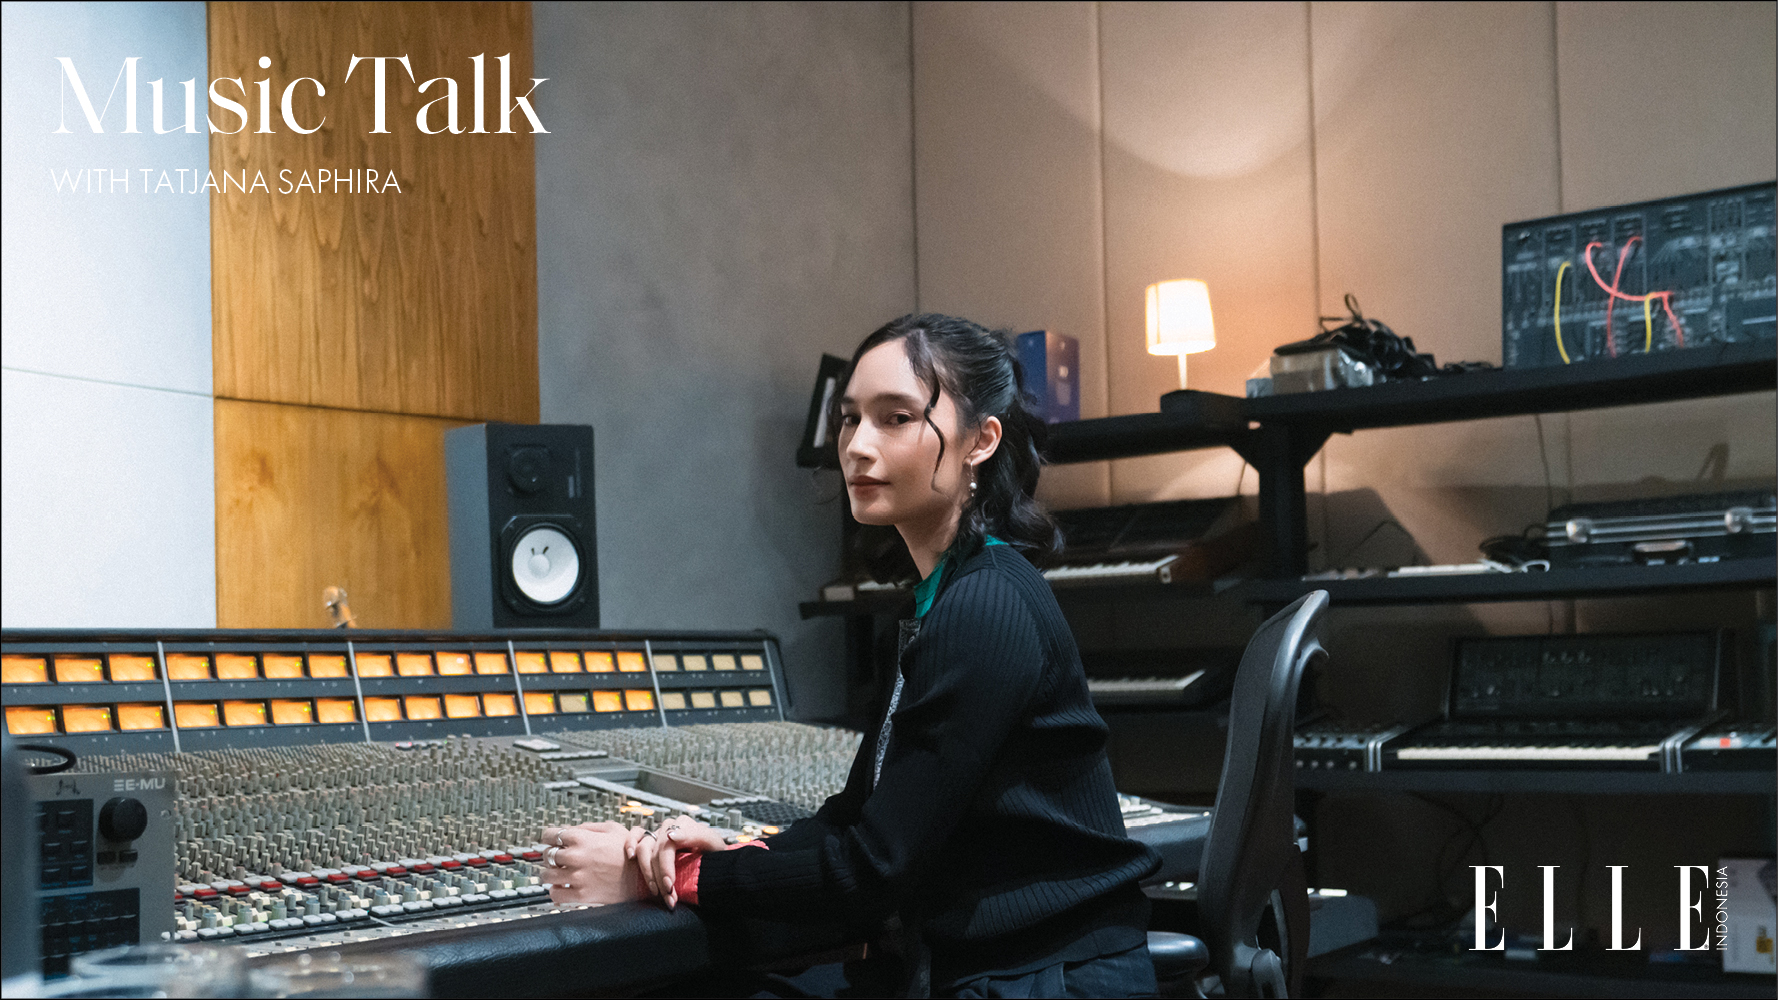 Tatjana Saphira on Music Debut and Her First EP Album | Music Talk